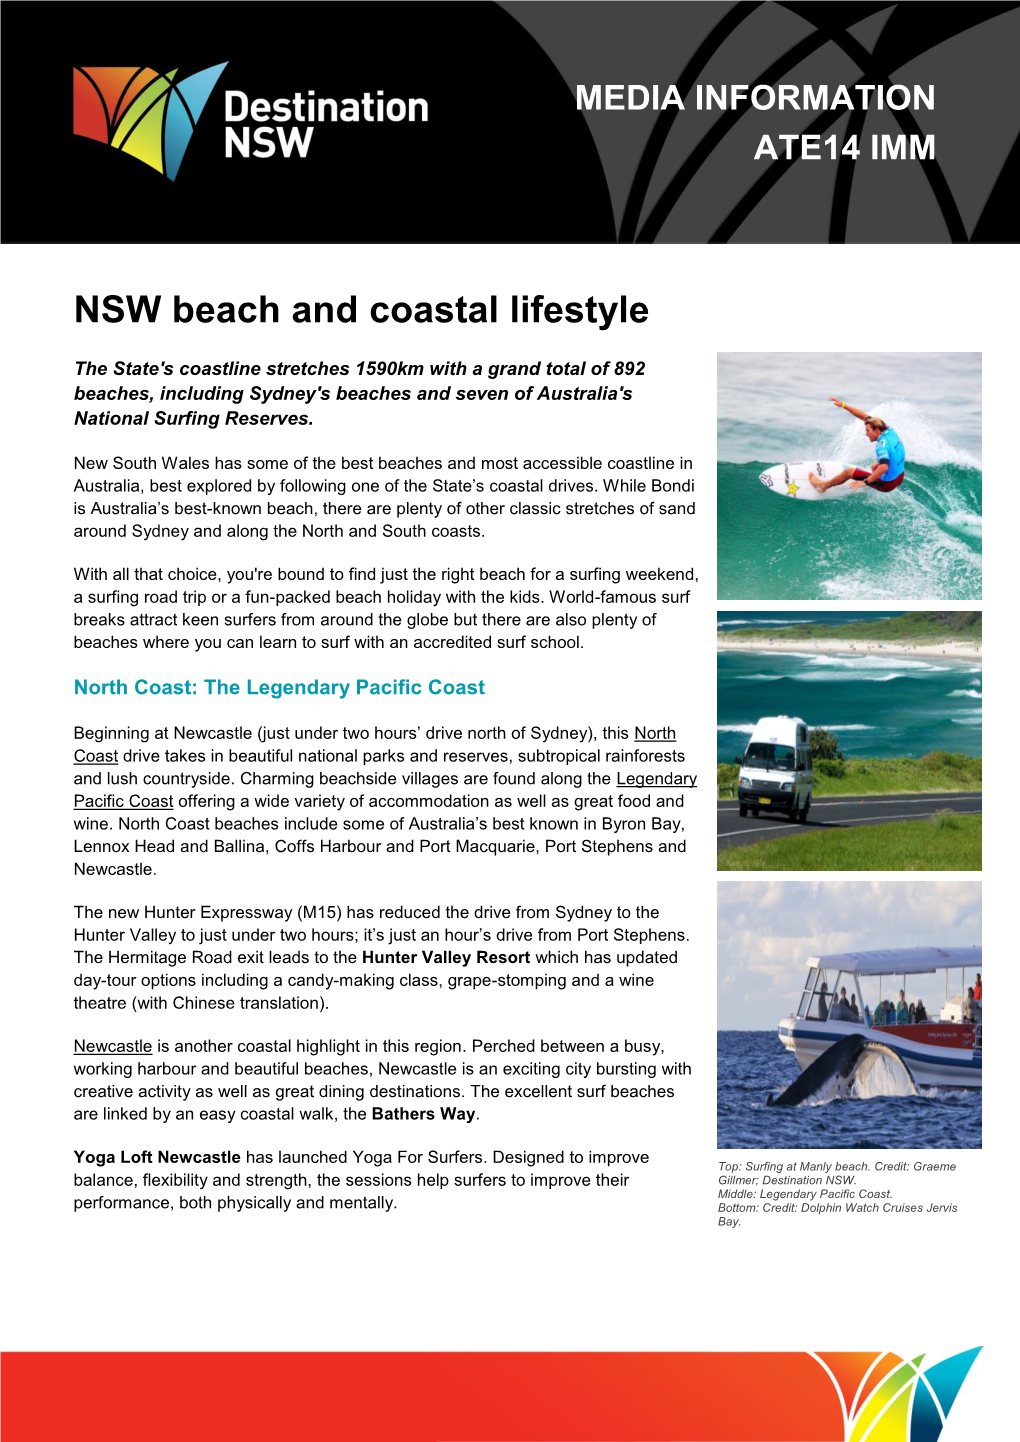 ATE14 Beach and Coastal Lifestyle Fact Sheet